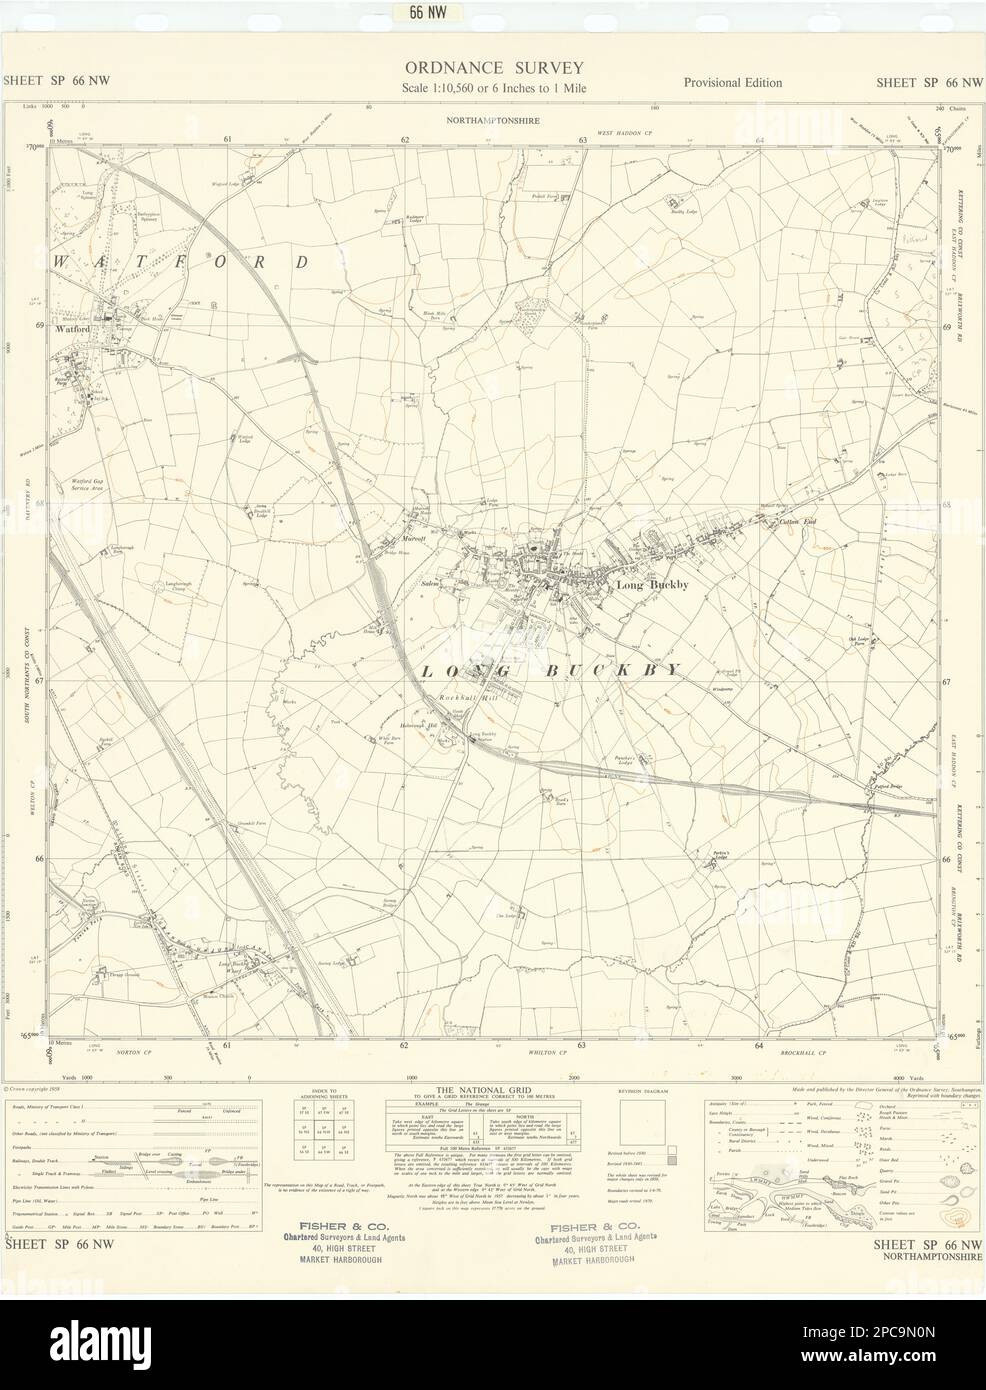 Ordnance Survey Sheet SP66NW Northamptonshire Long Buckby Watford 1970 mapa antiguo Foto de stock